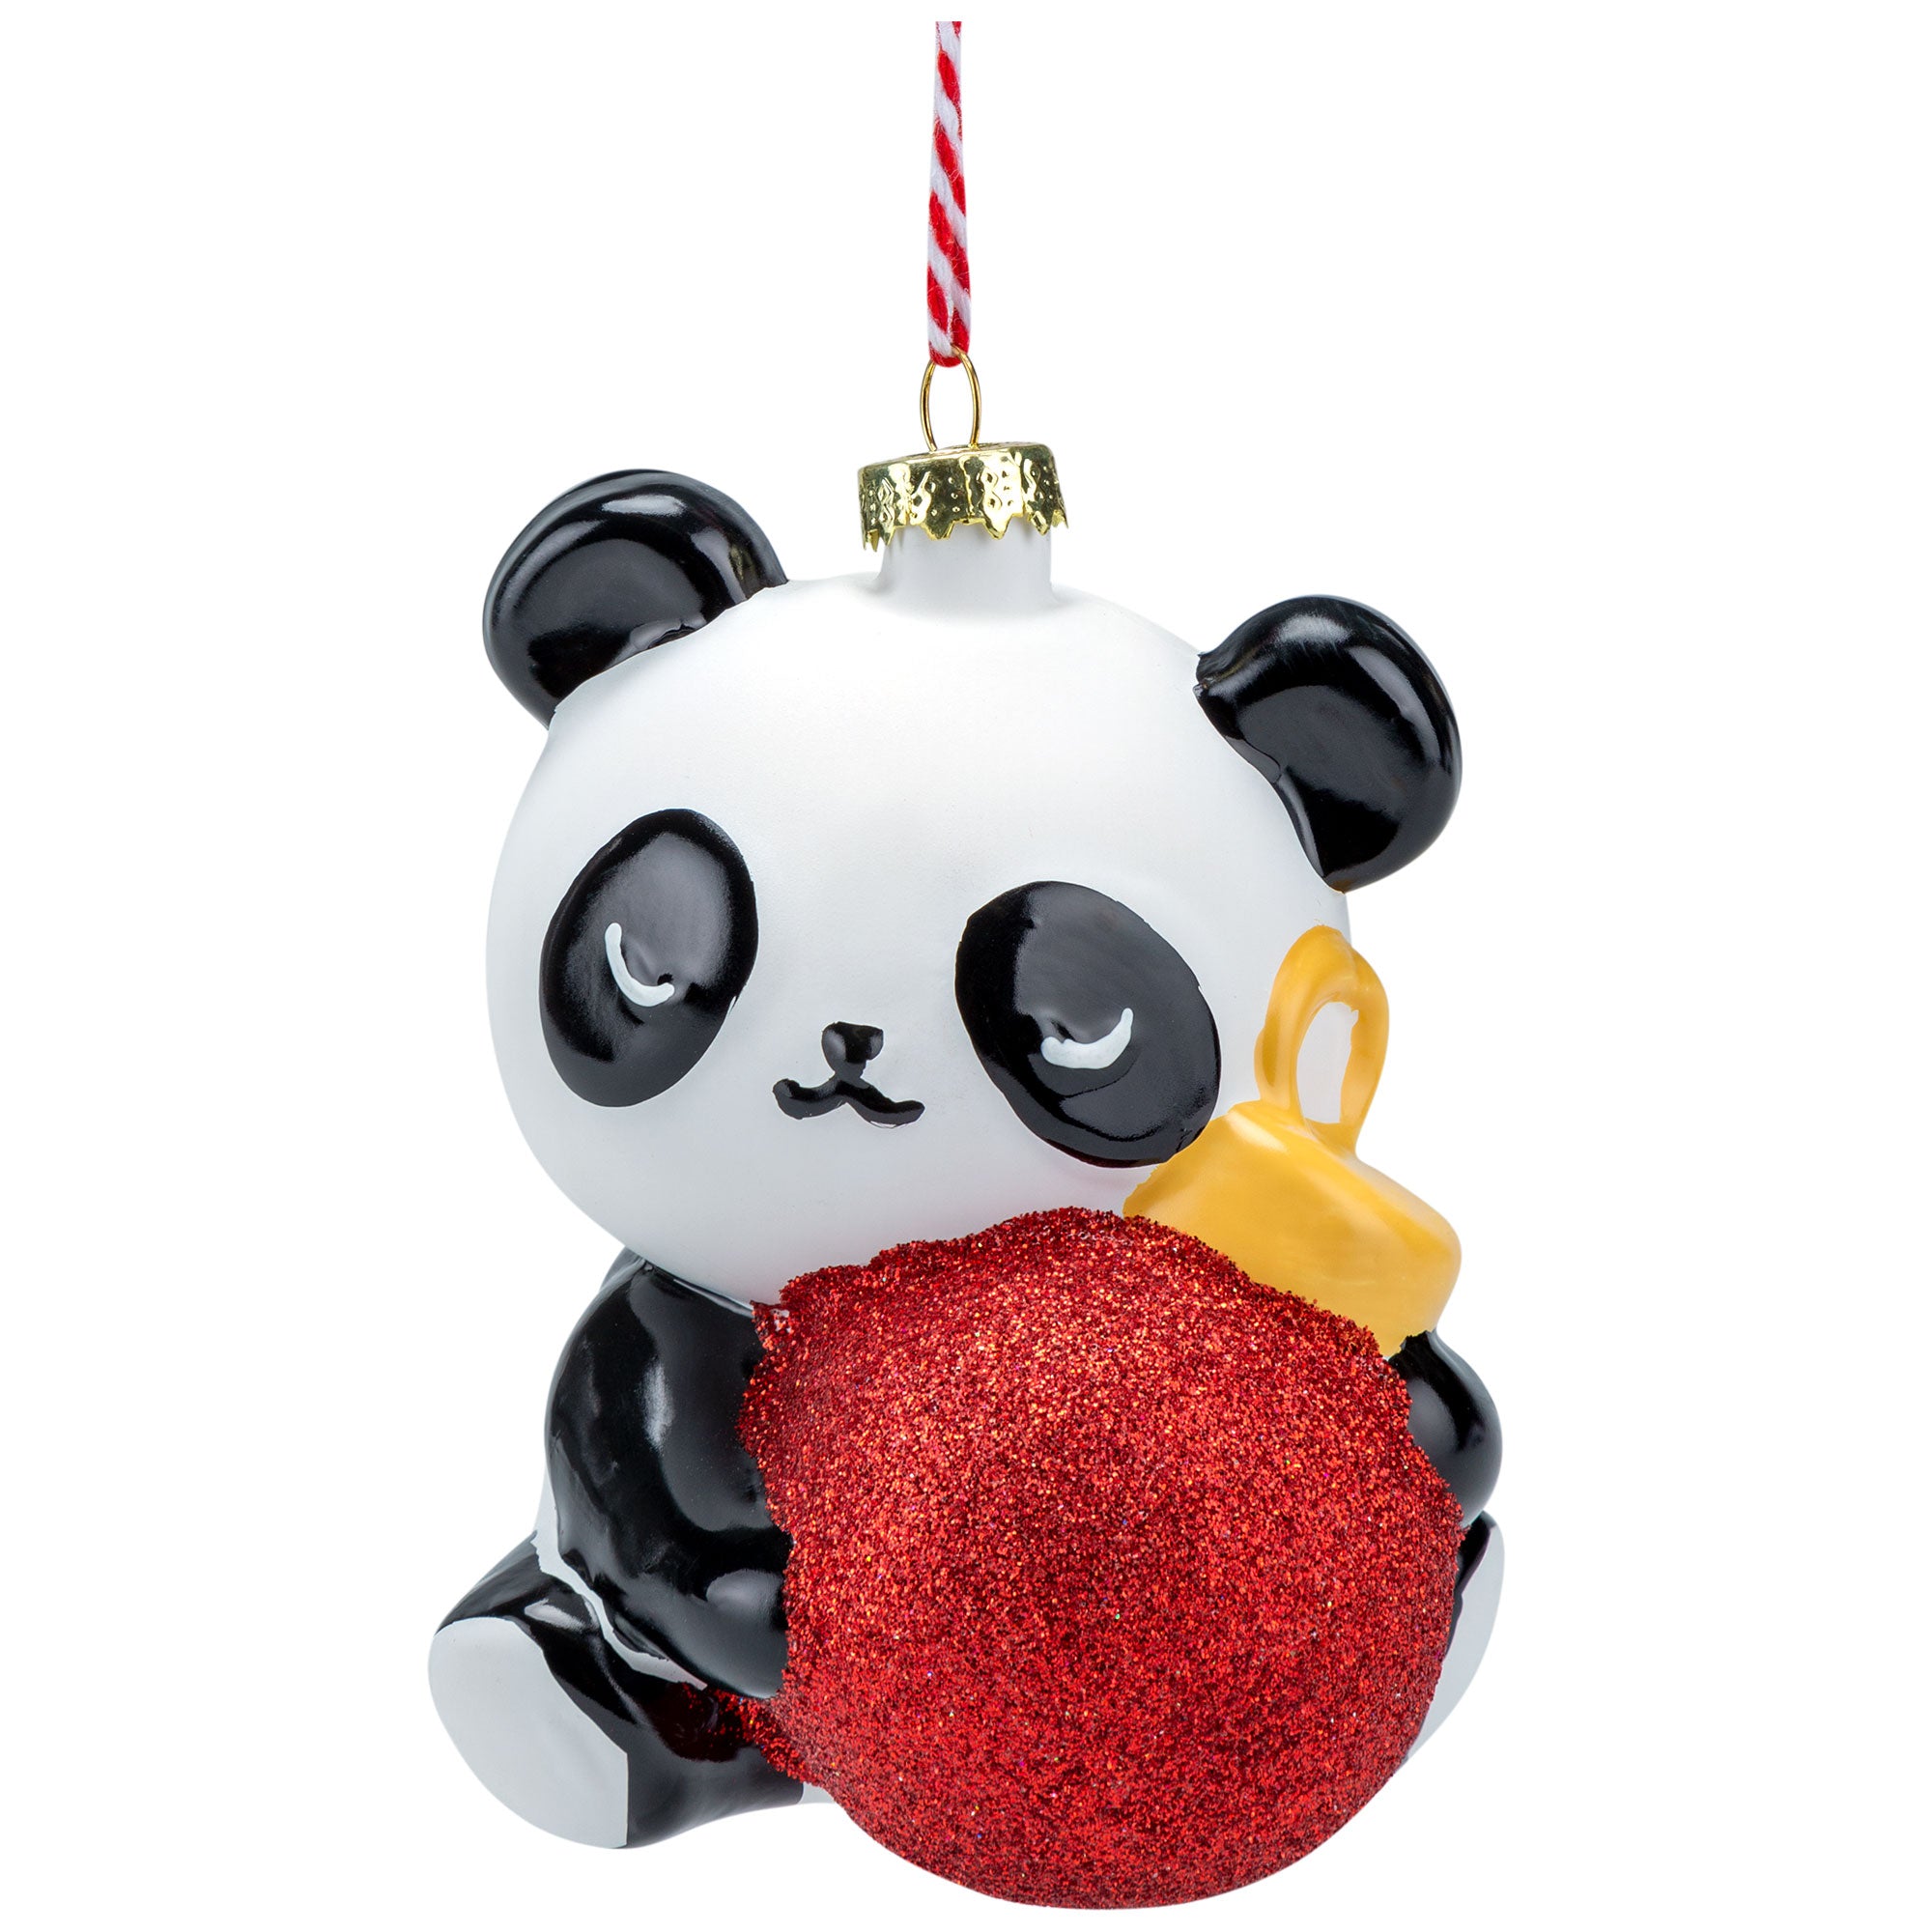 Adorable Animal Glass Bauble Ornament - Panda